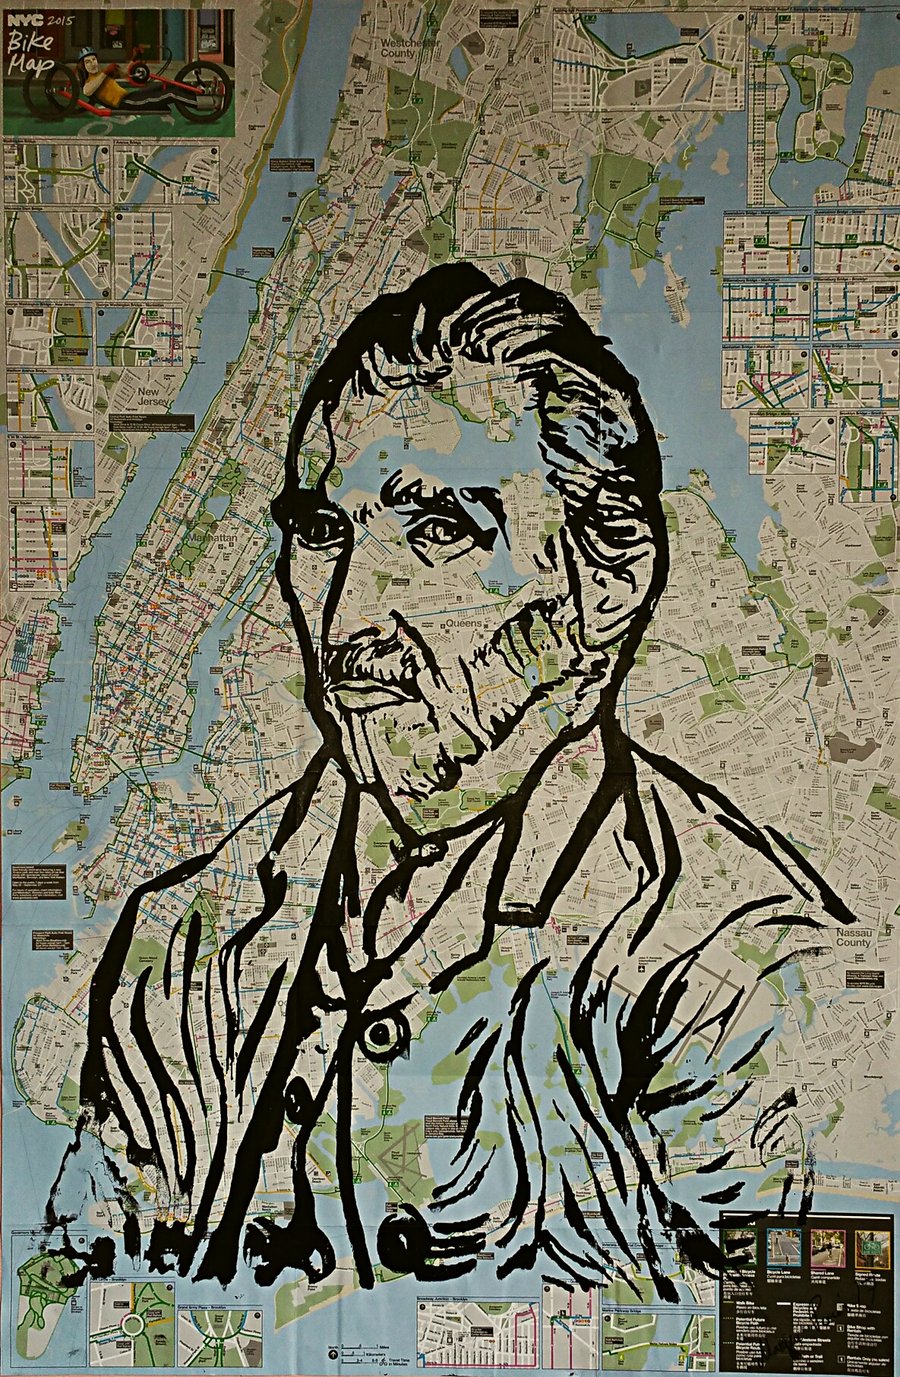 Image of Original silkscreen on NYC  Bike, Subway maps: "Van Gogh".